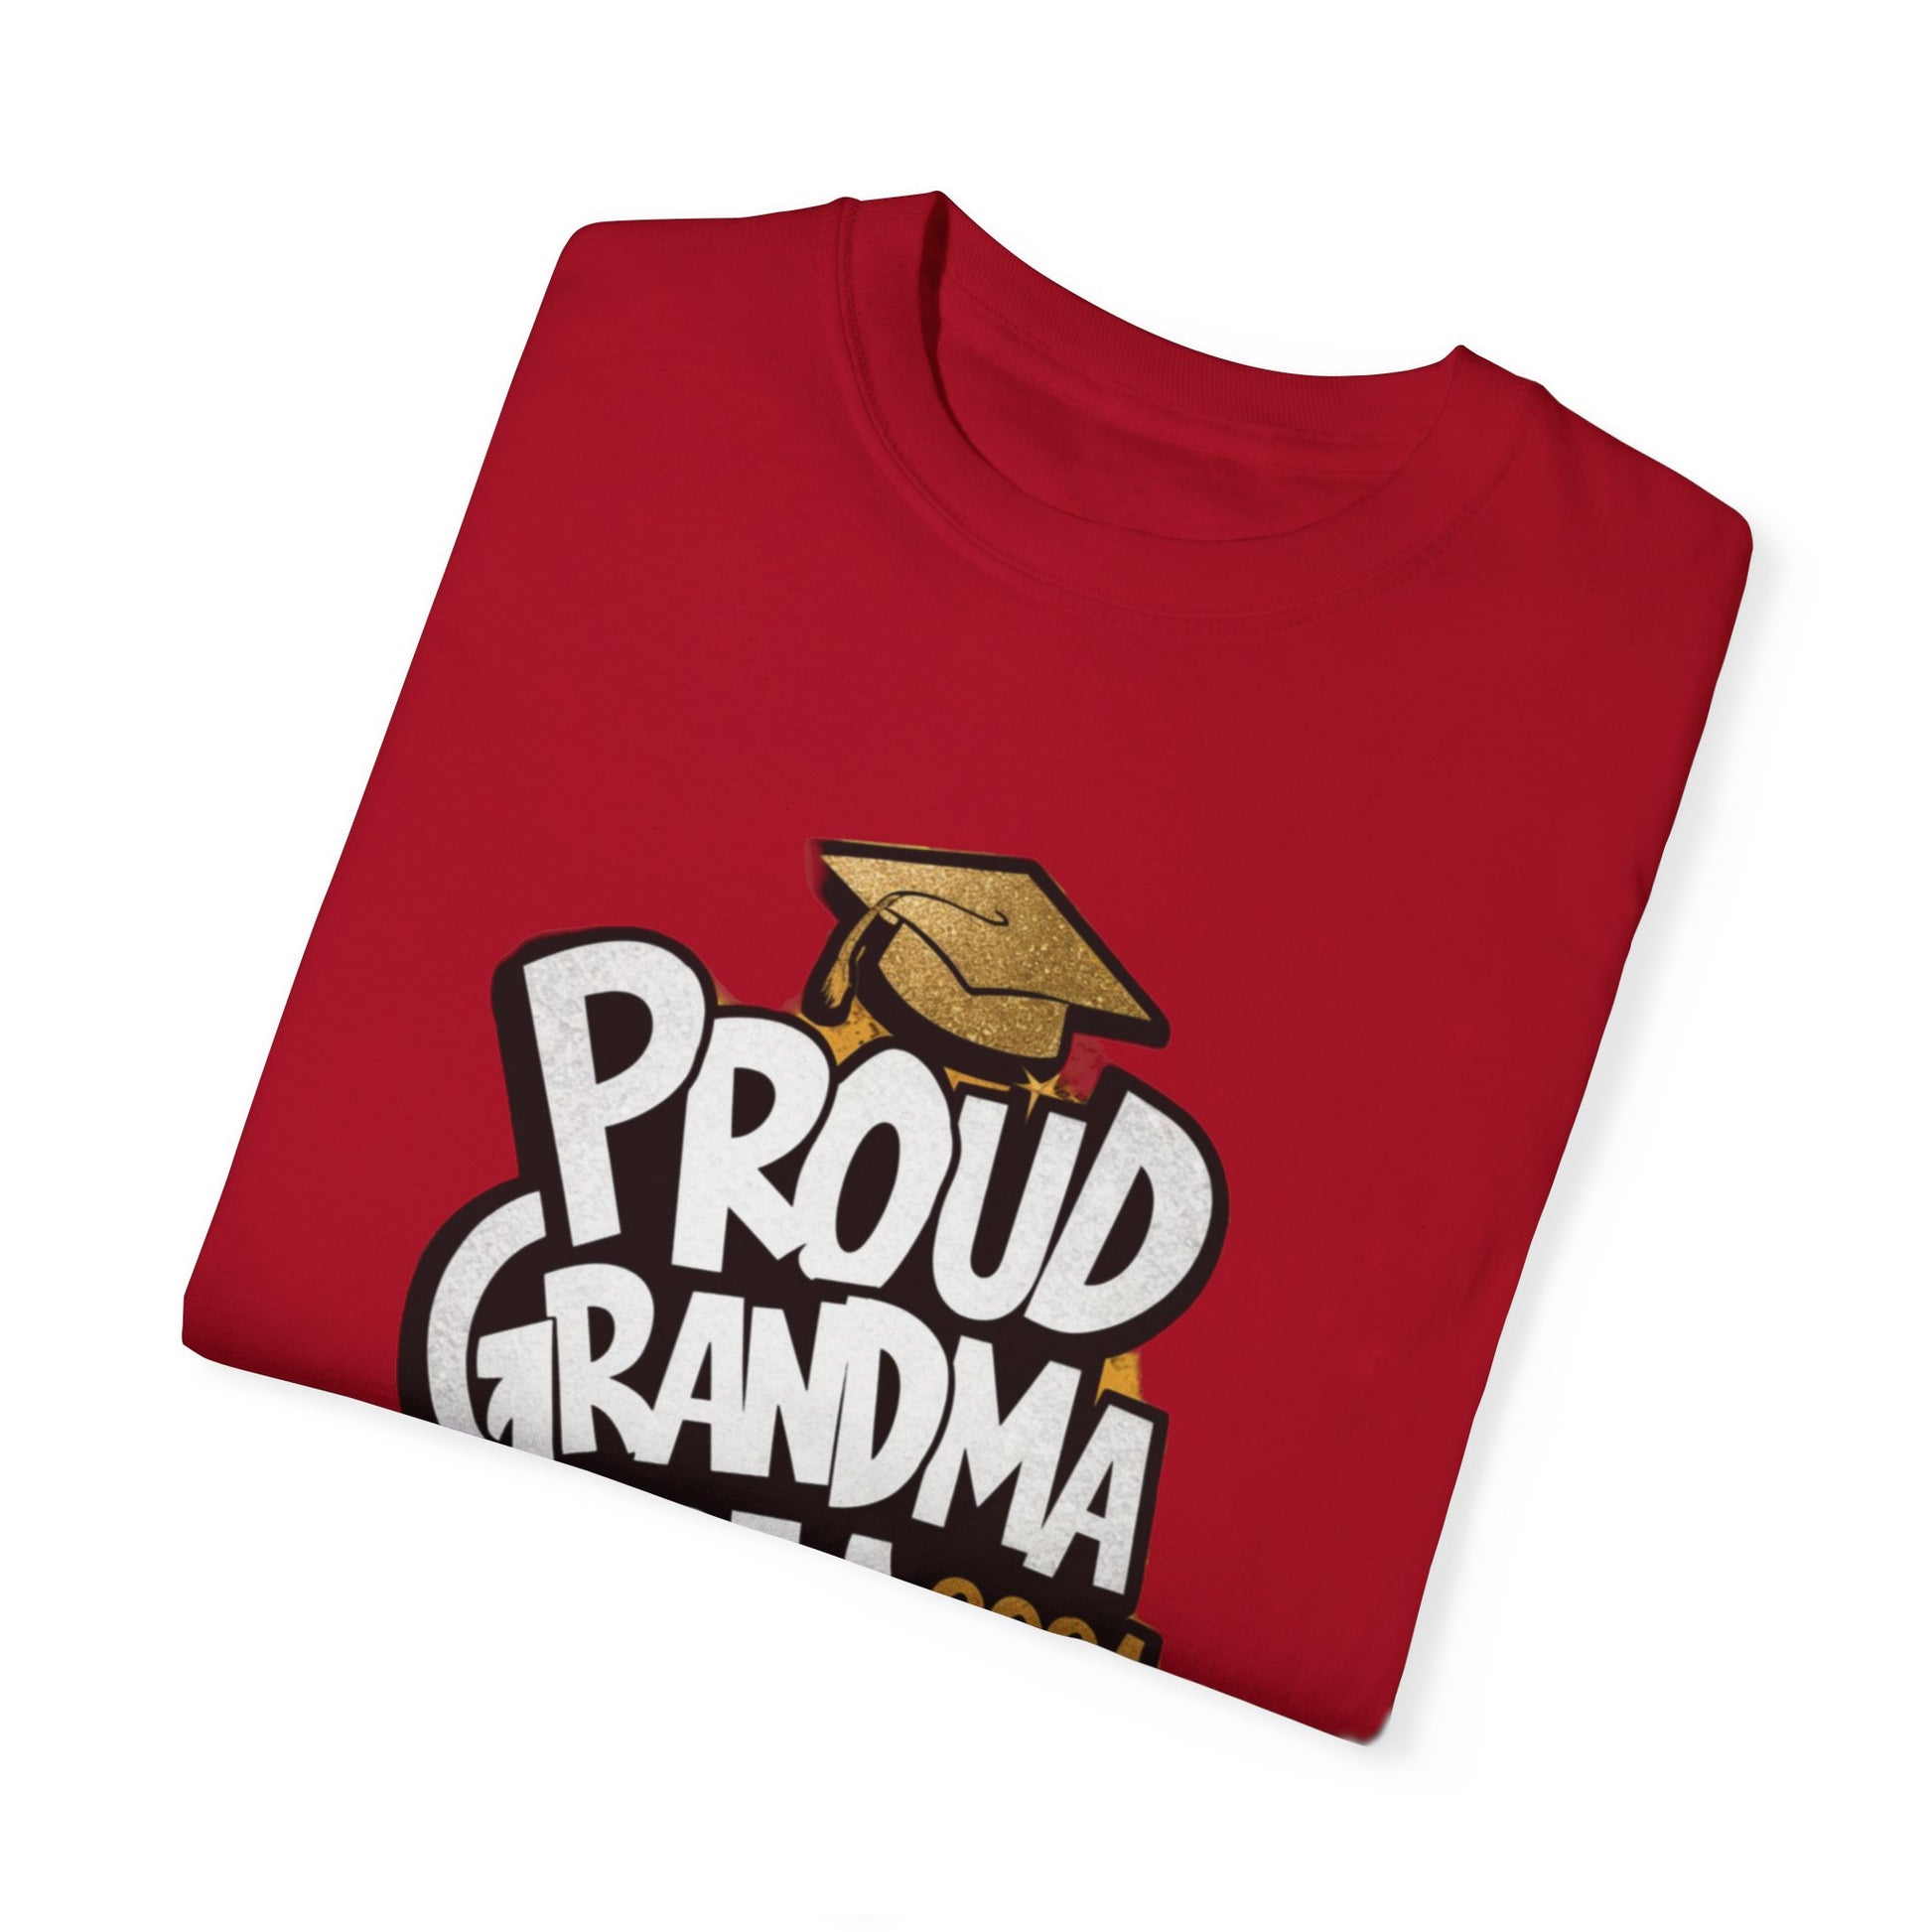 Proud of Grandma 2024 Graduate Unisex Garment-dyed T-shirt Cotton Funny Humorous Graphic Soft Premium Unisex Men Women Red T-shirt Birthday Gift-20